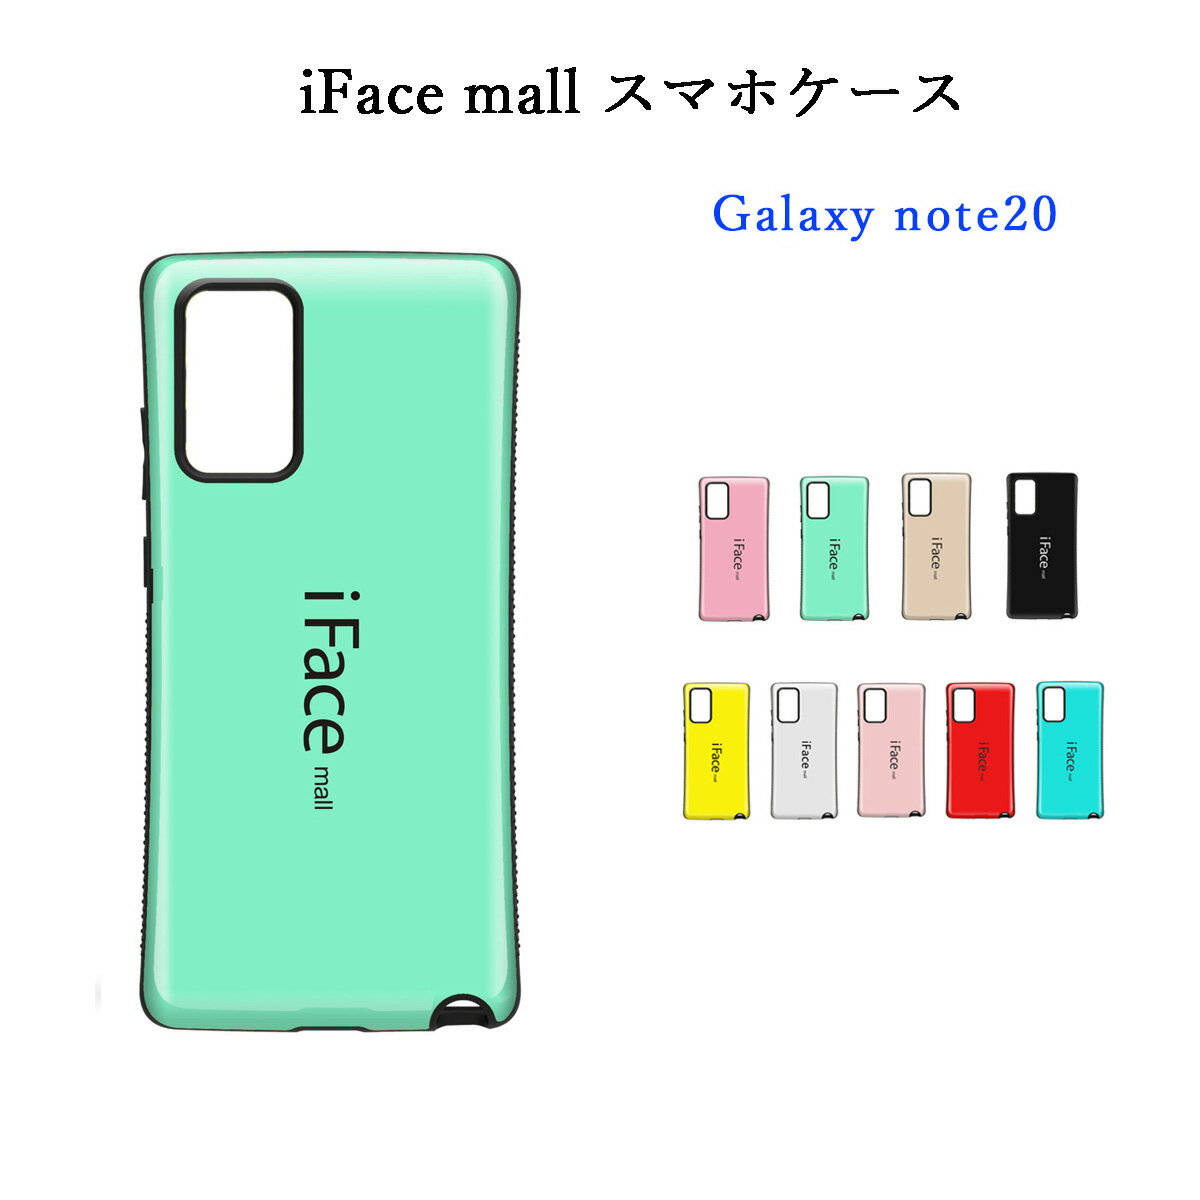 iFace mall ケース Galaxy note20 ケース Galaxy note 20 カバー iFacemall ケース 5G ギャラクシー ノート20 スマホケース galaxynote20 ケース